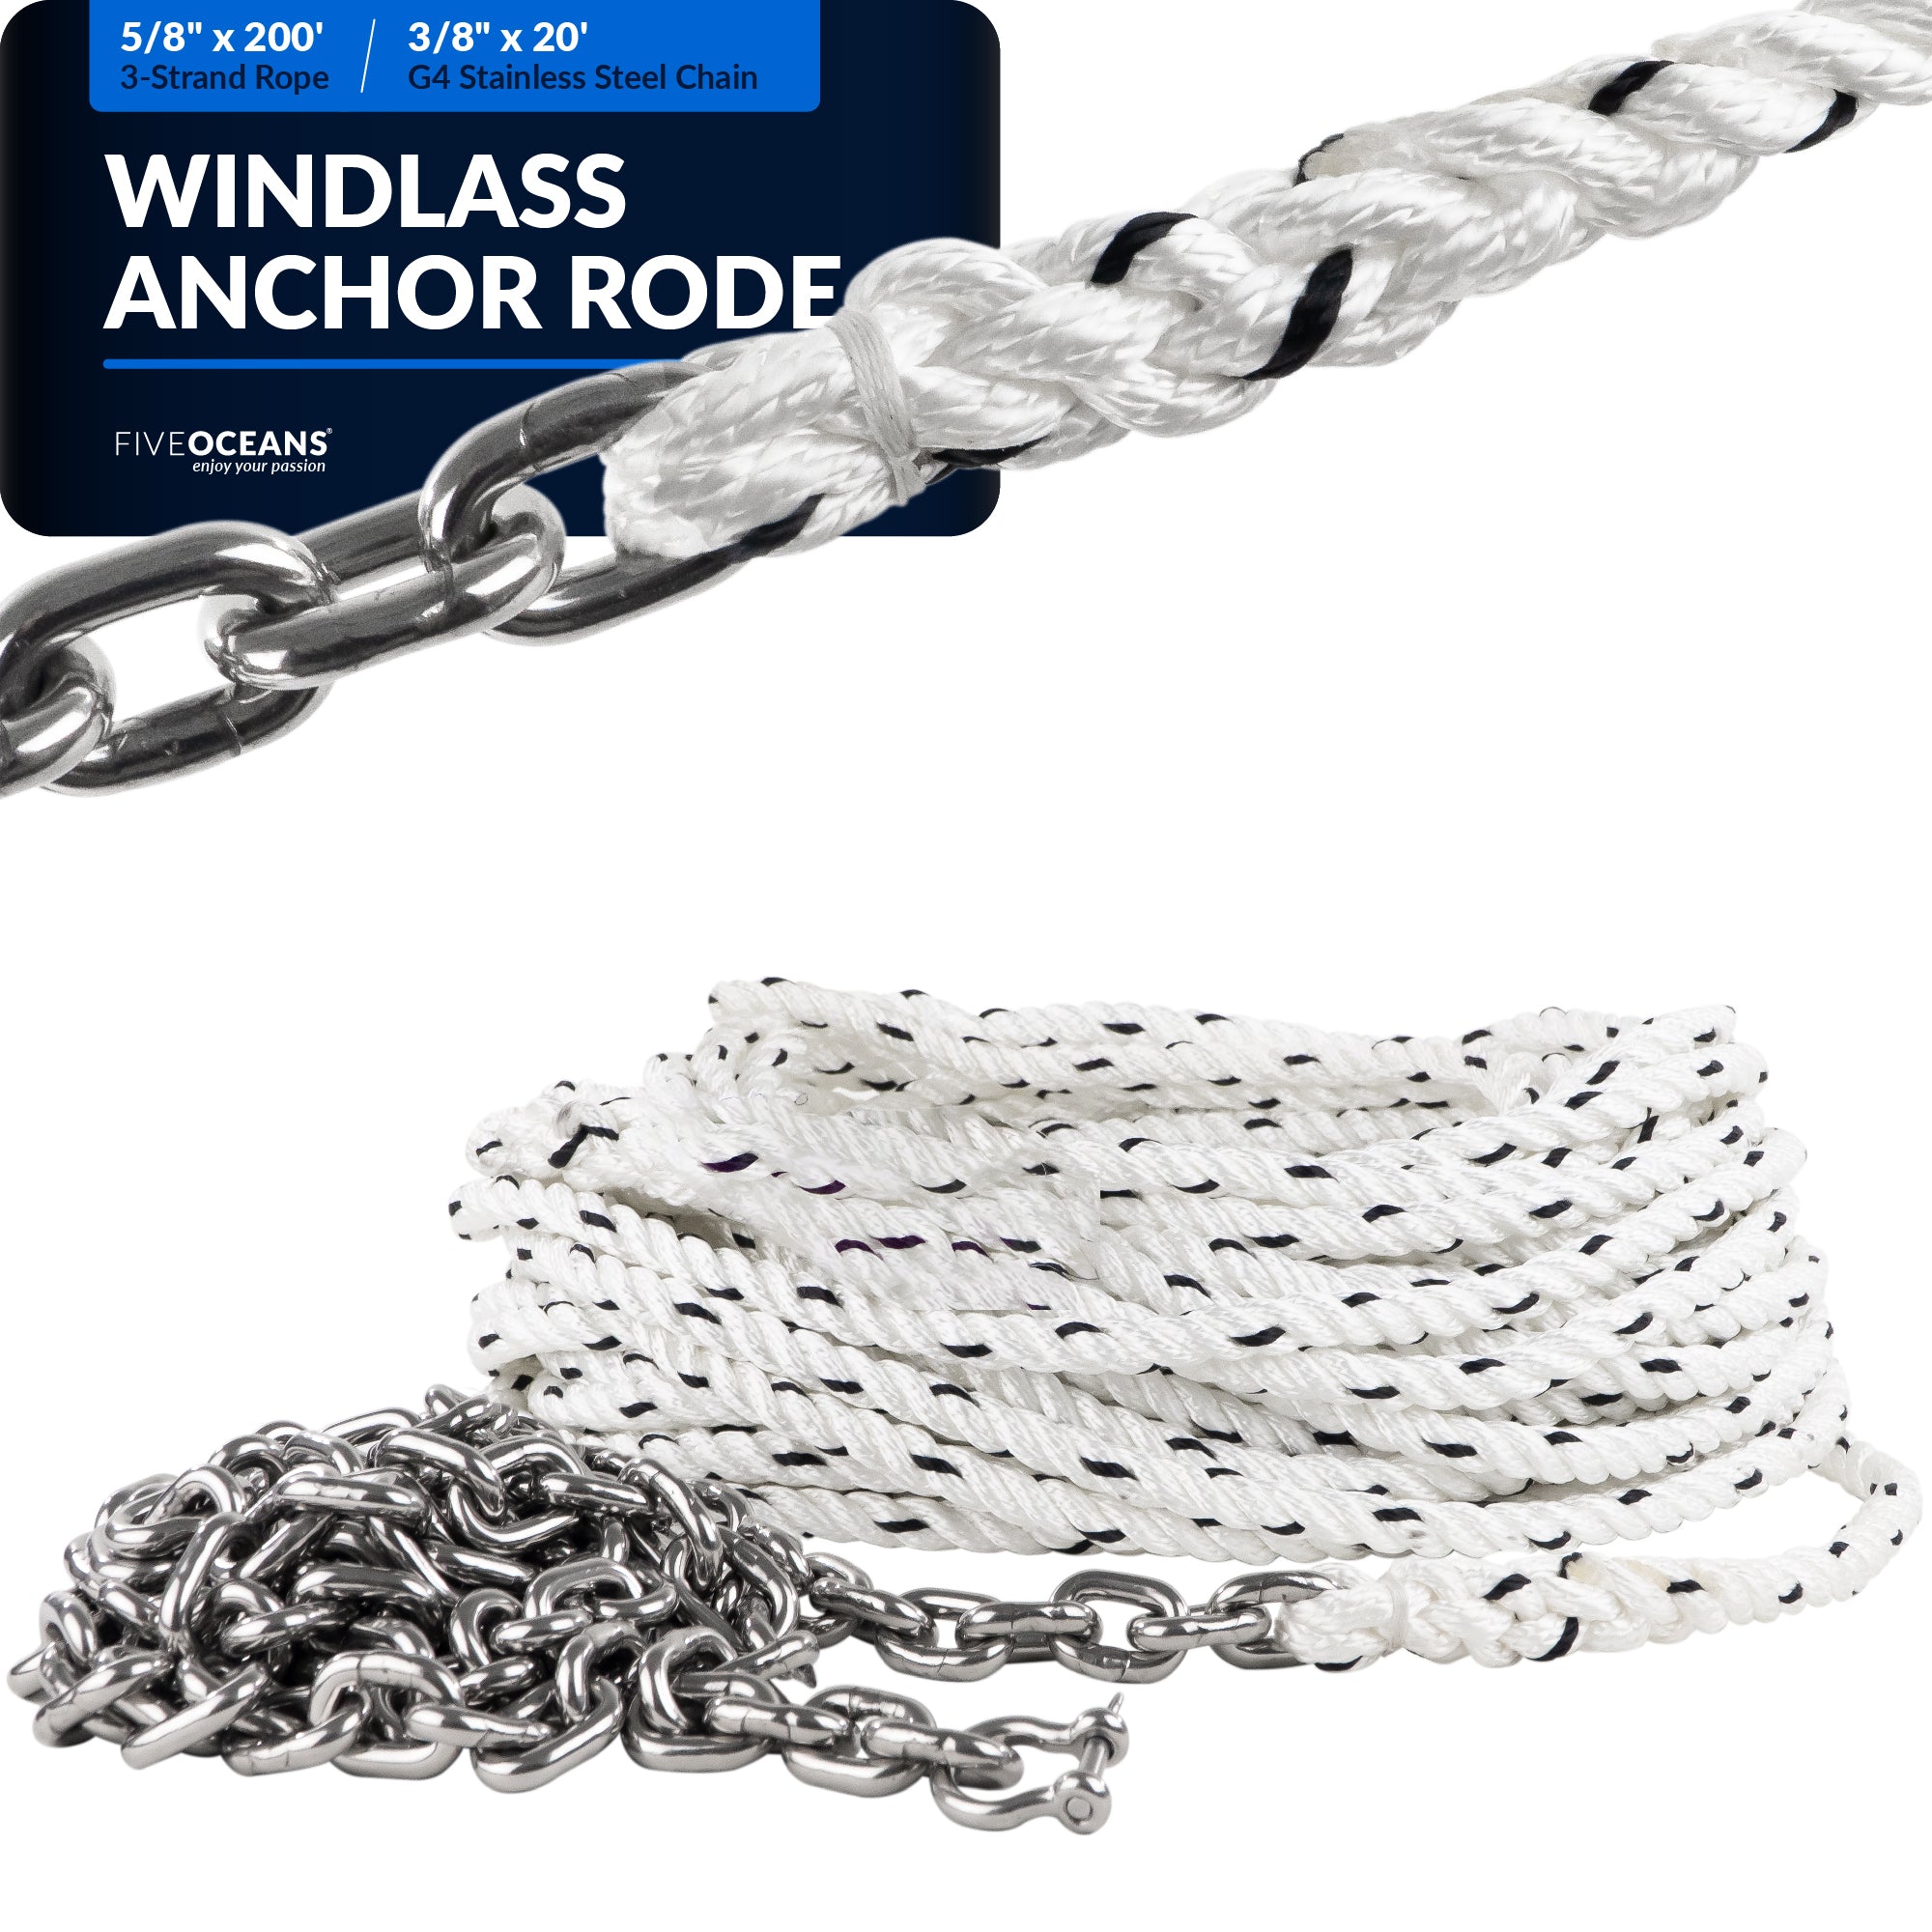 Windlass Anchor Rode, 5/8" x 200' Nylon 3-Strand Rope, 3/8" x 20' G4 Stainless Steel Chain - FO4534